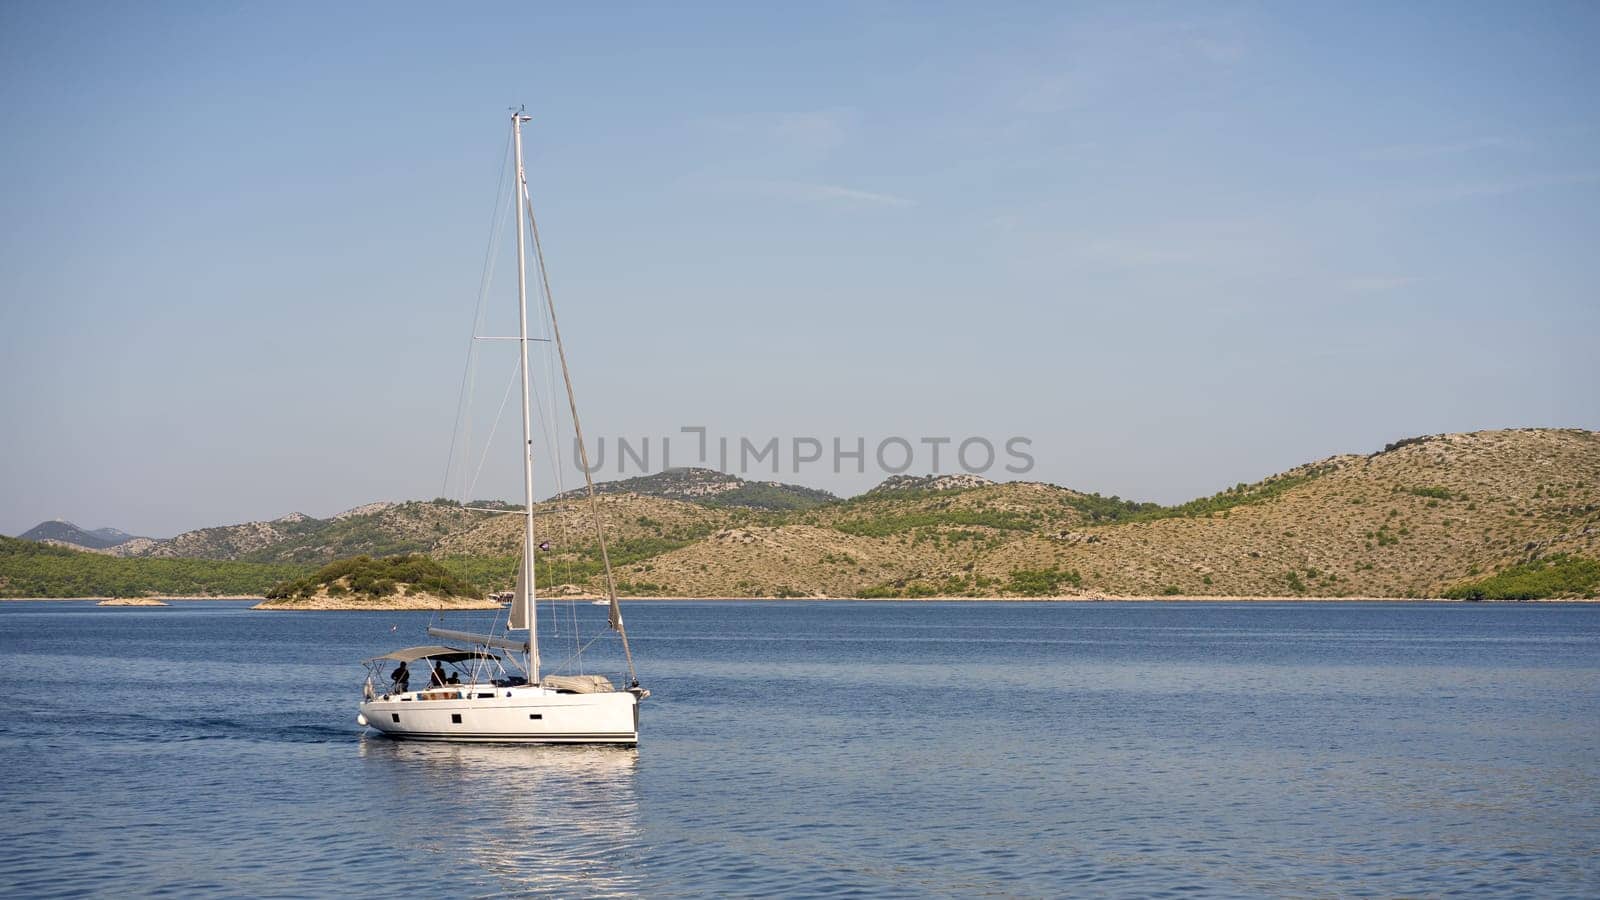 Coastal seaside scenic landscape of Dugi Otok island, luxury floating yacht in Adriatic Sea, Croatia